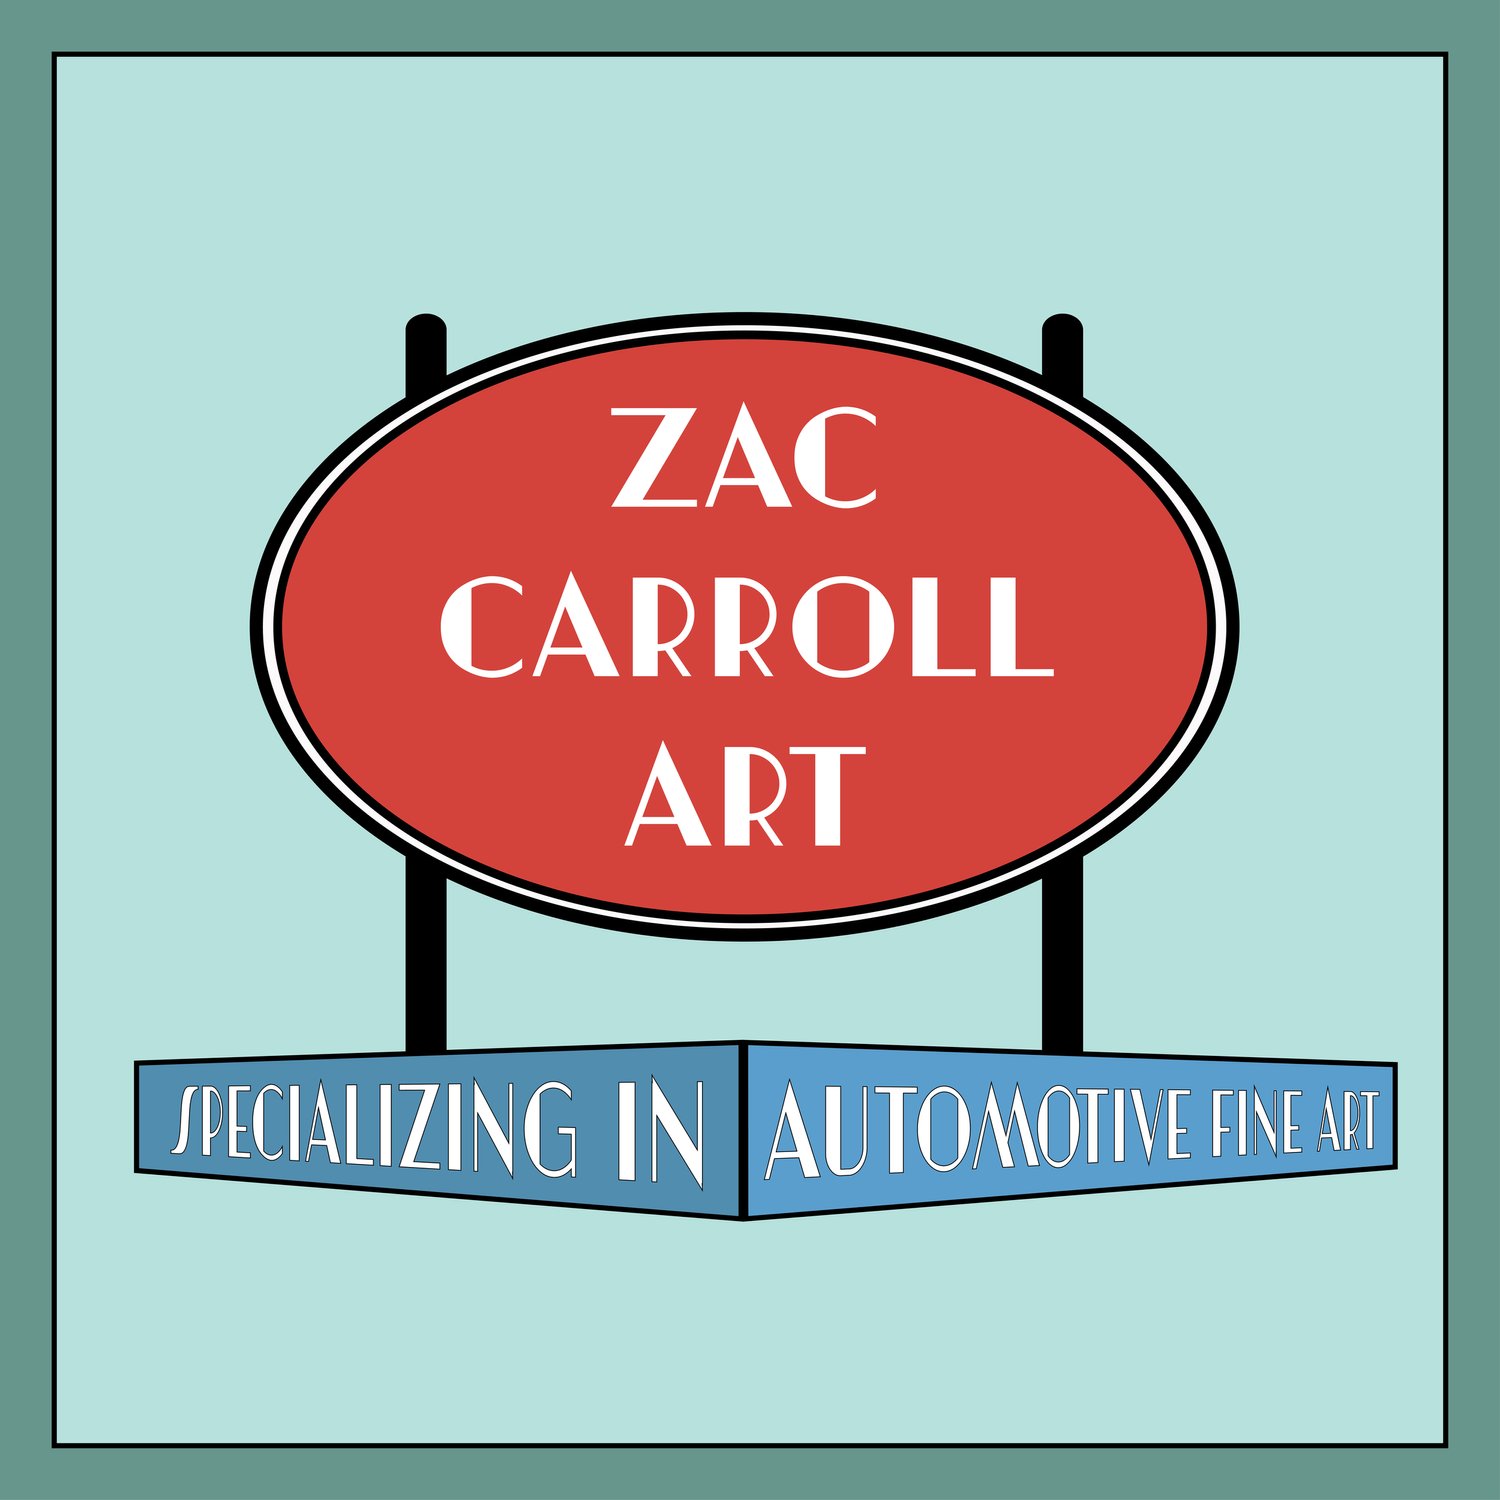 Zac Carroll Art